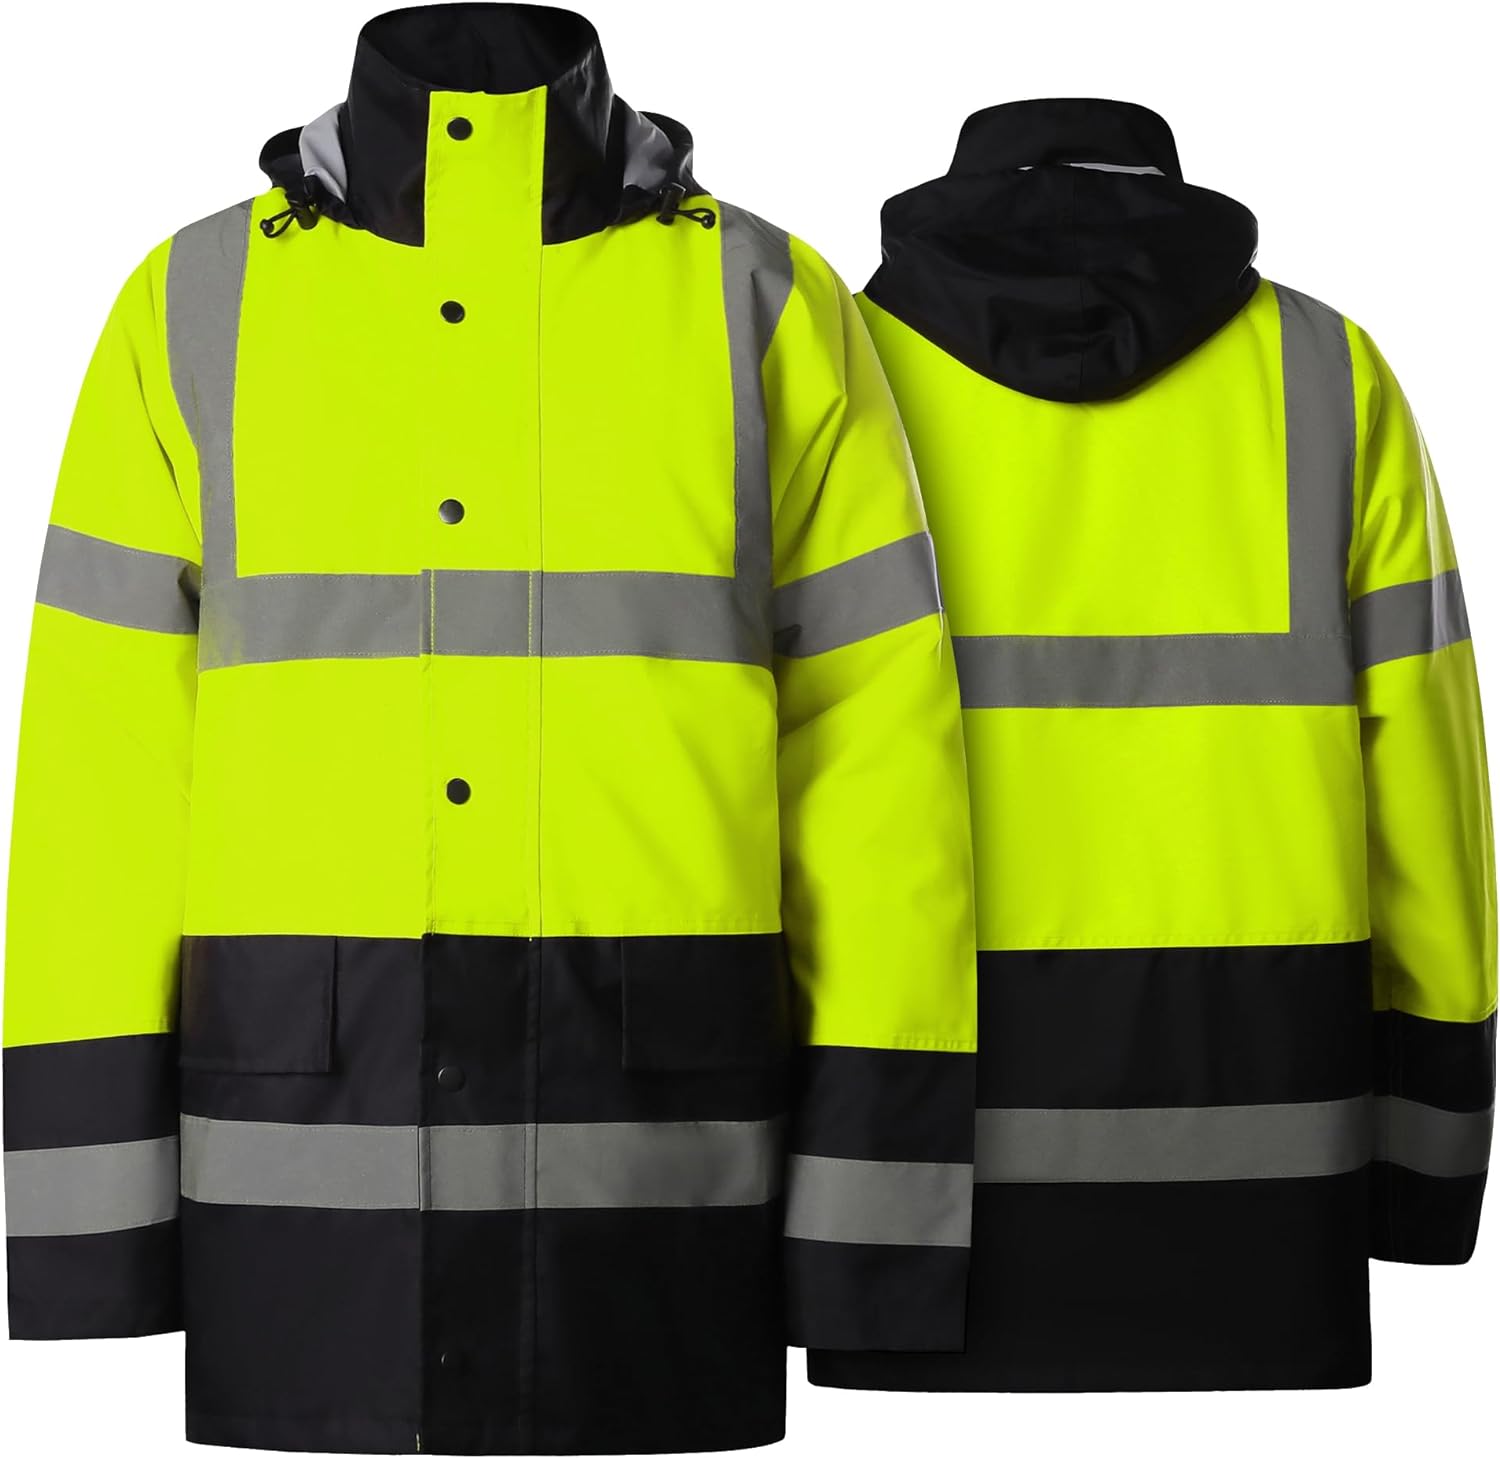 SHORFUNE Hi Vis Safety Reflective Jacket for Men, Waterproof Class